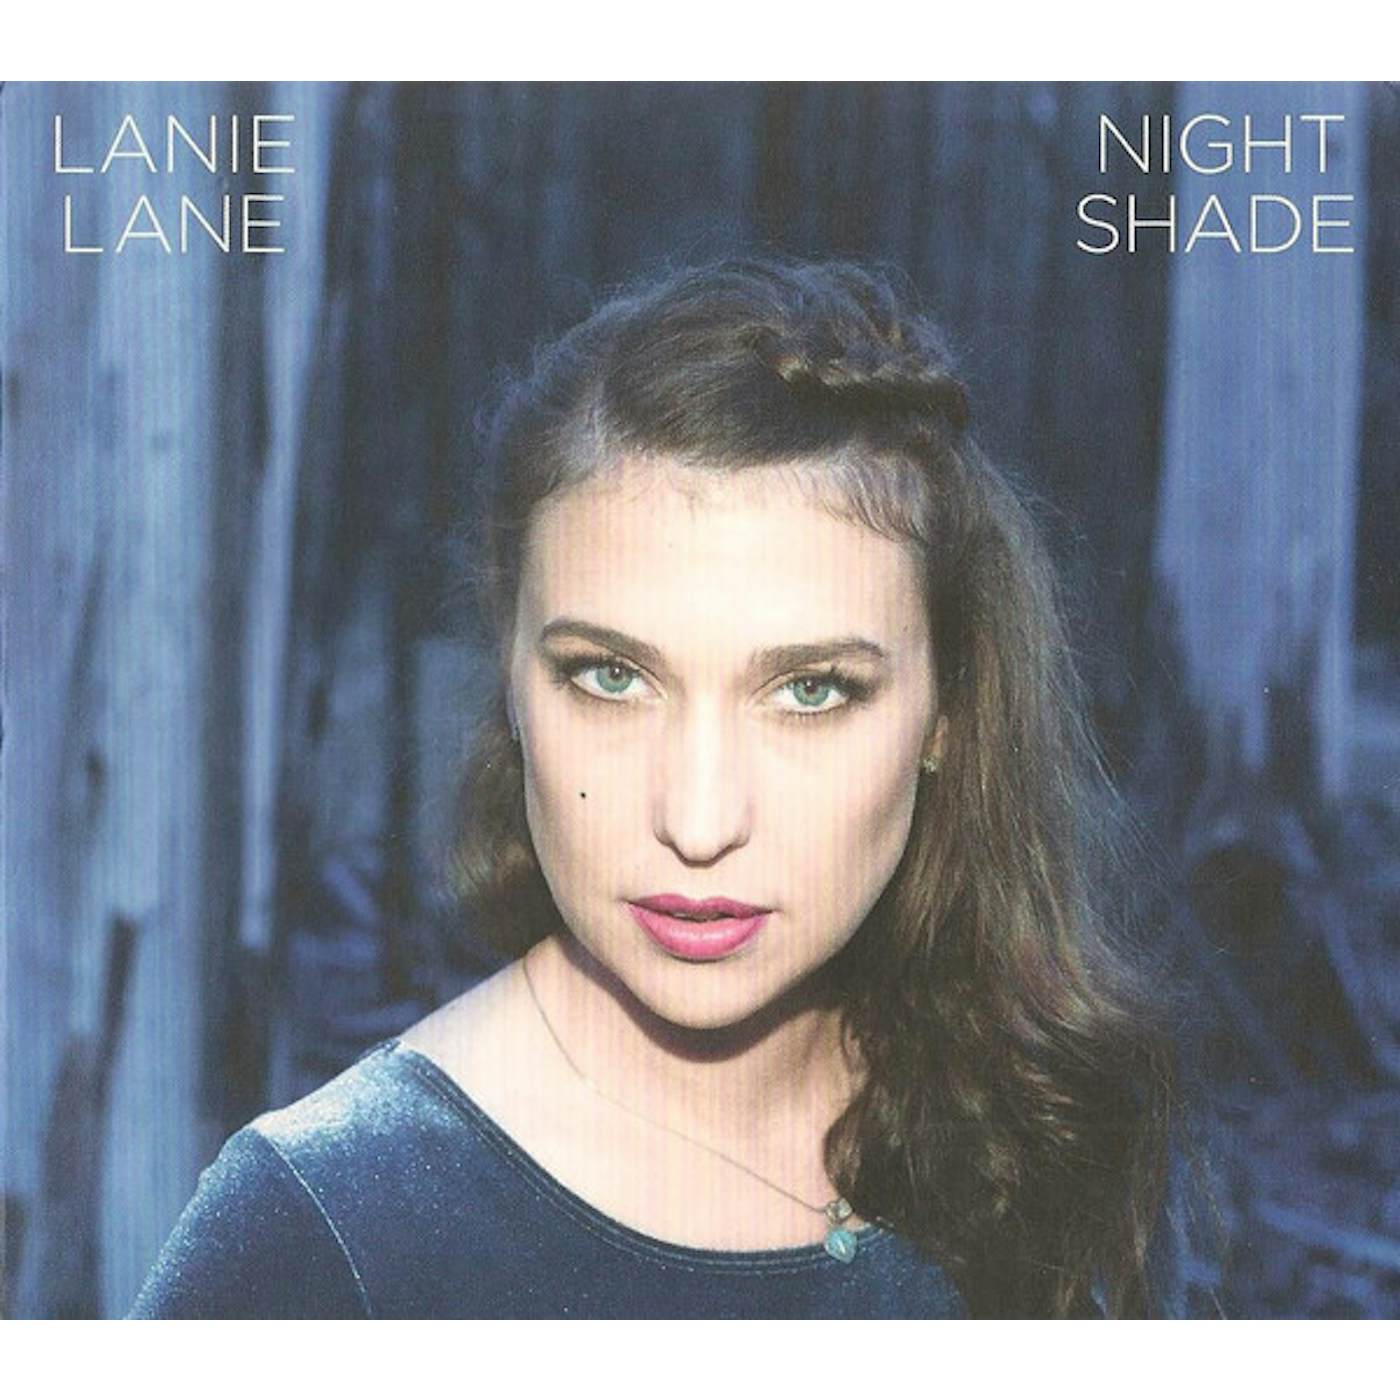 Lanie Lane NIGHT SHADE (AUS) (Vinyl)